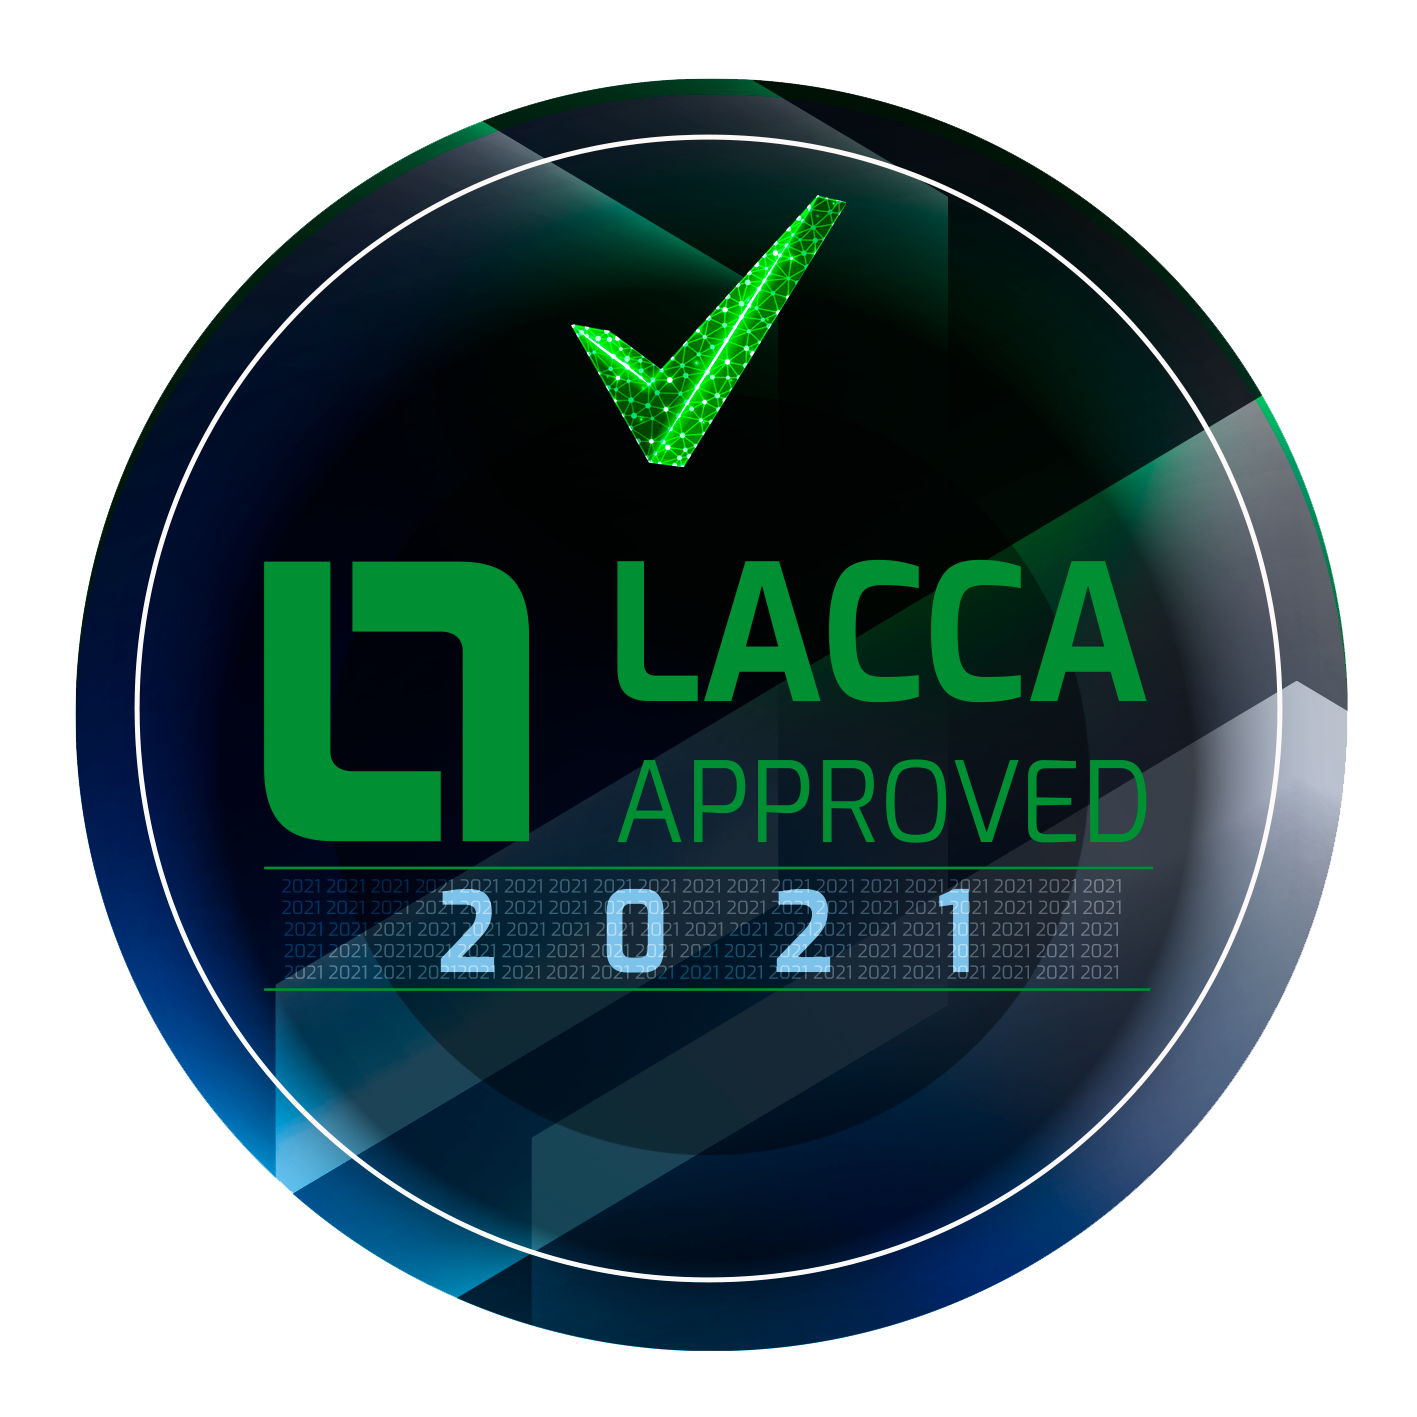 LACCA (Latin America Corporate Counsel Association - 2021